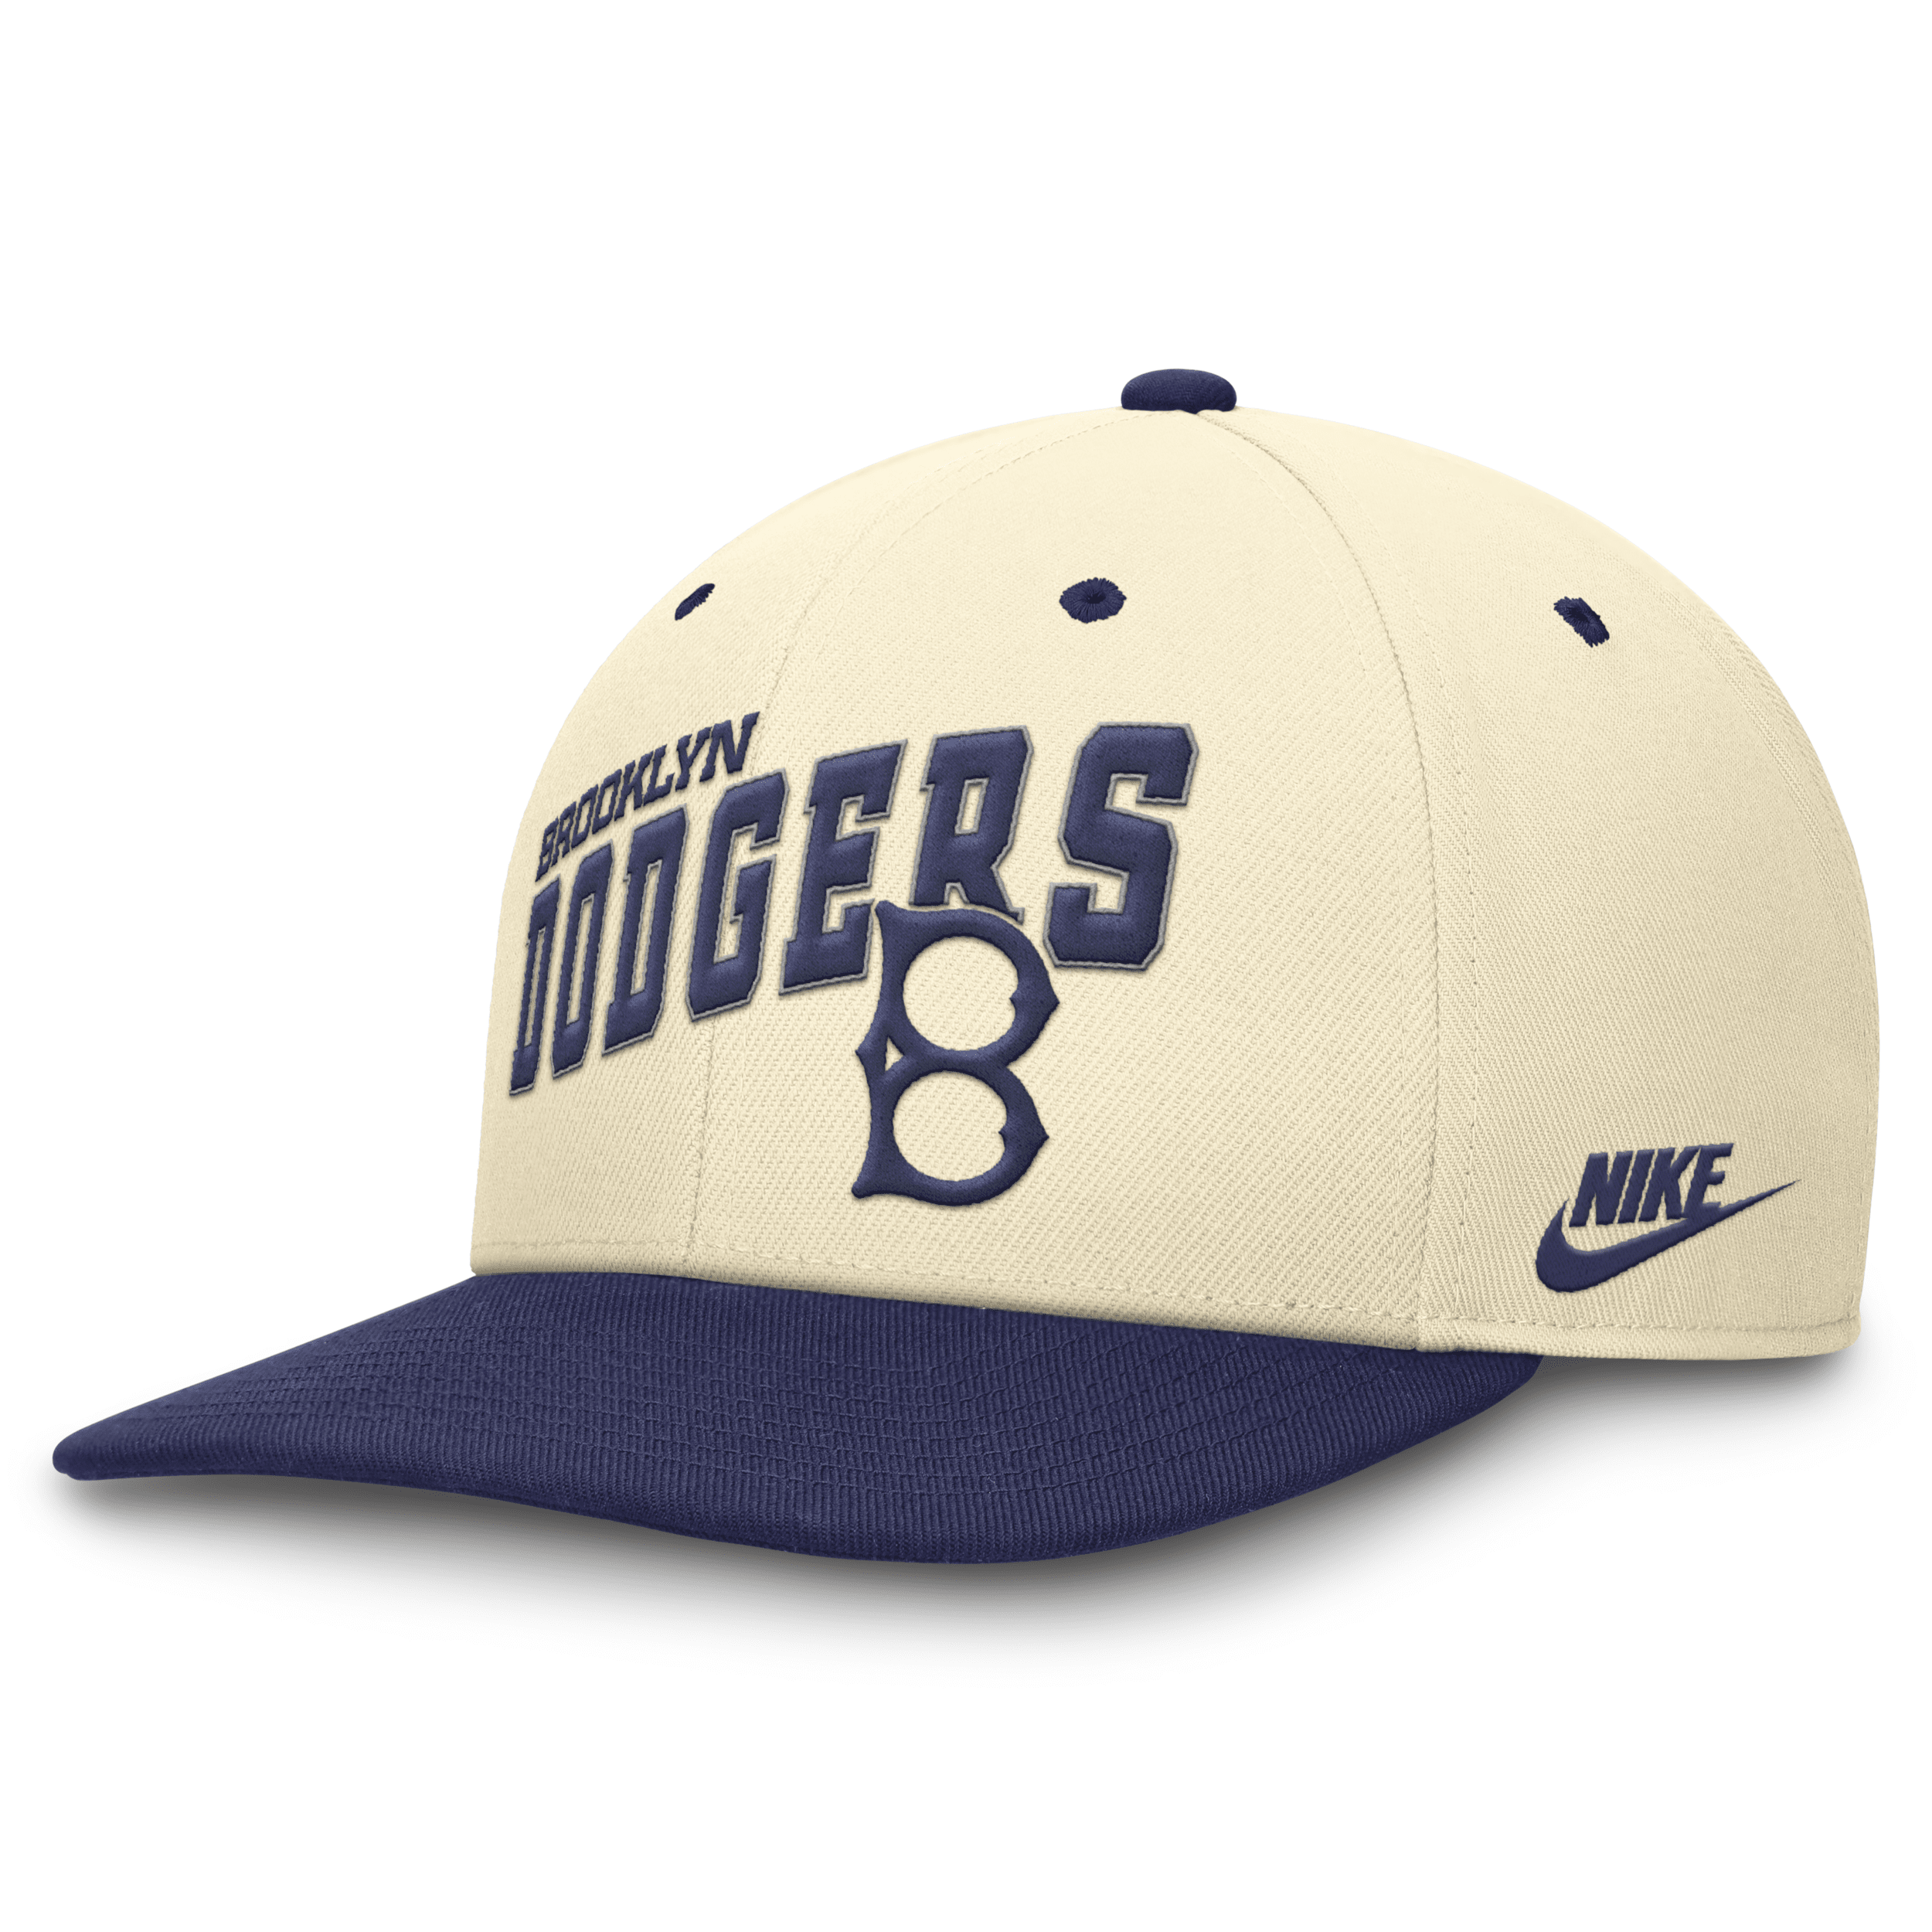 Nike Brooklyn Dodgers Rewind Cooperstown Pro  Men's Dri-fit Mlb Adjustable Hat In Brown